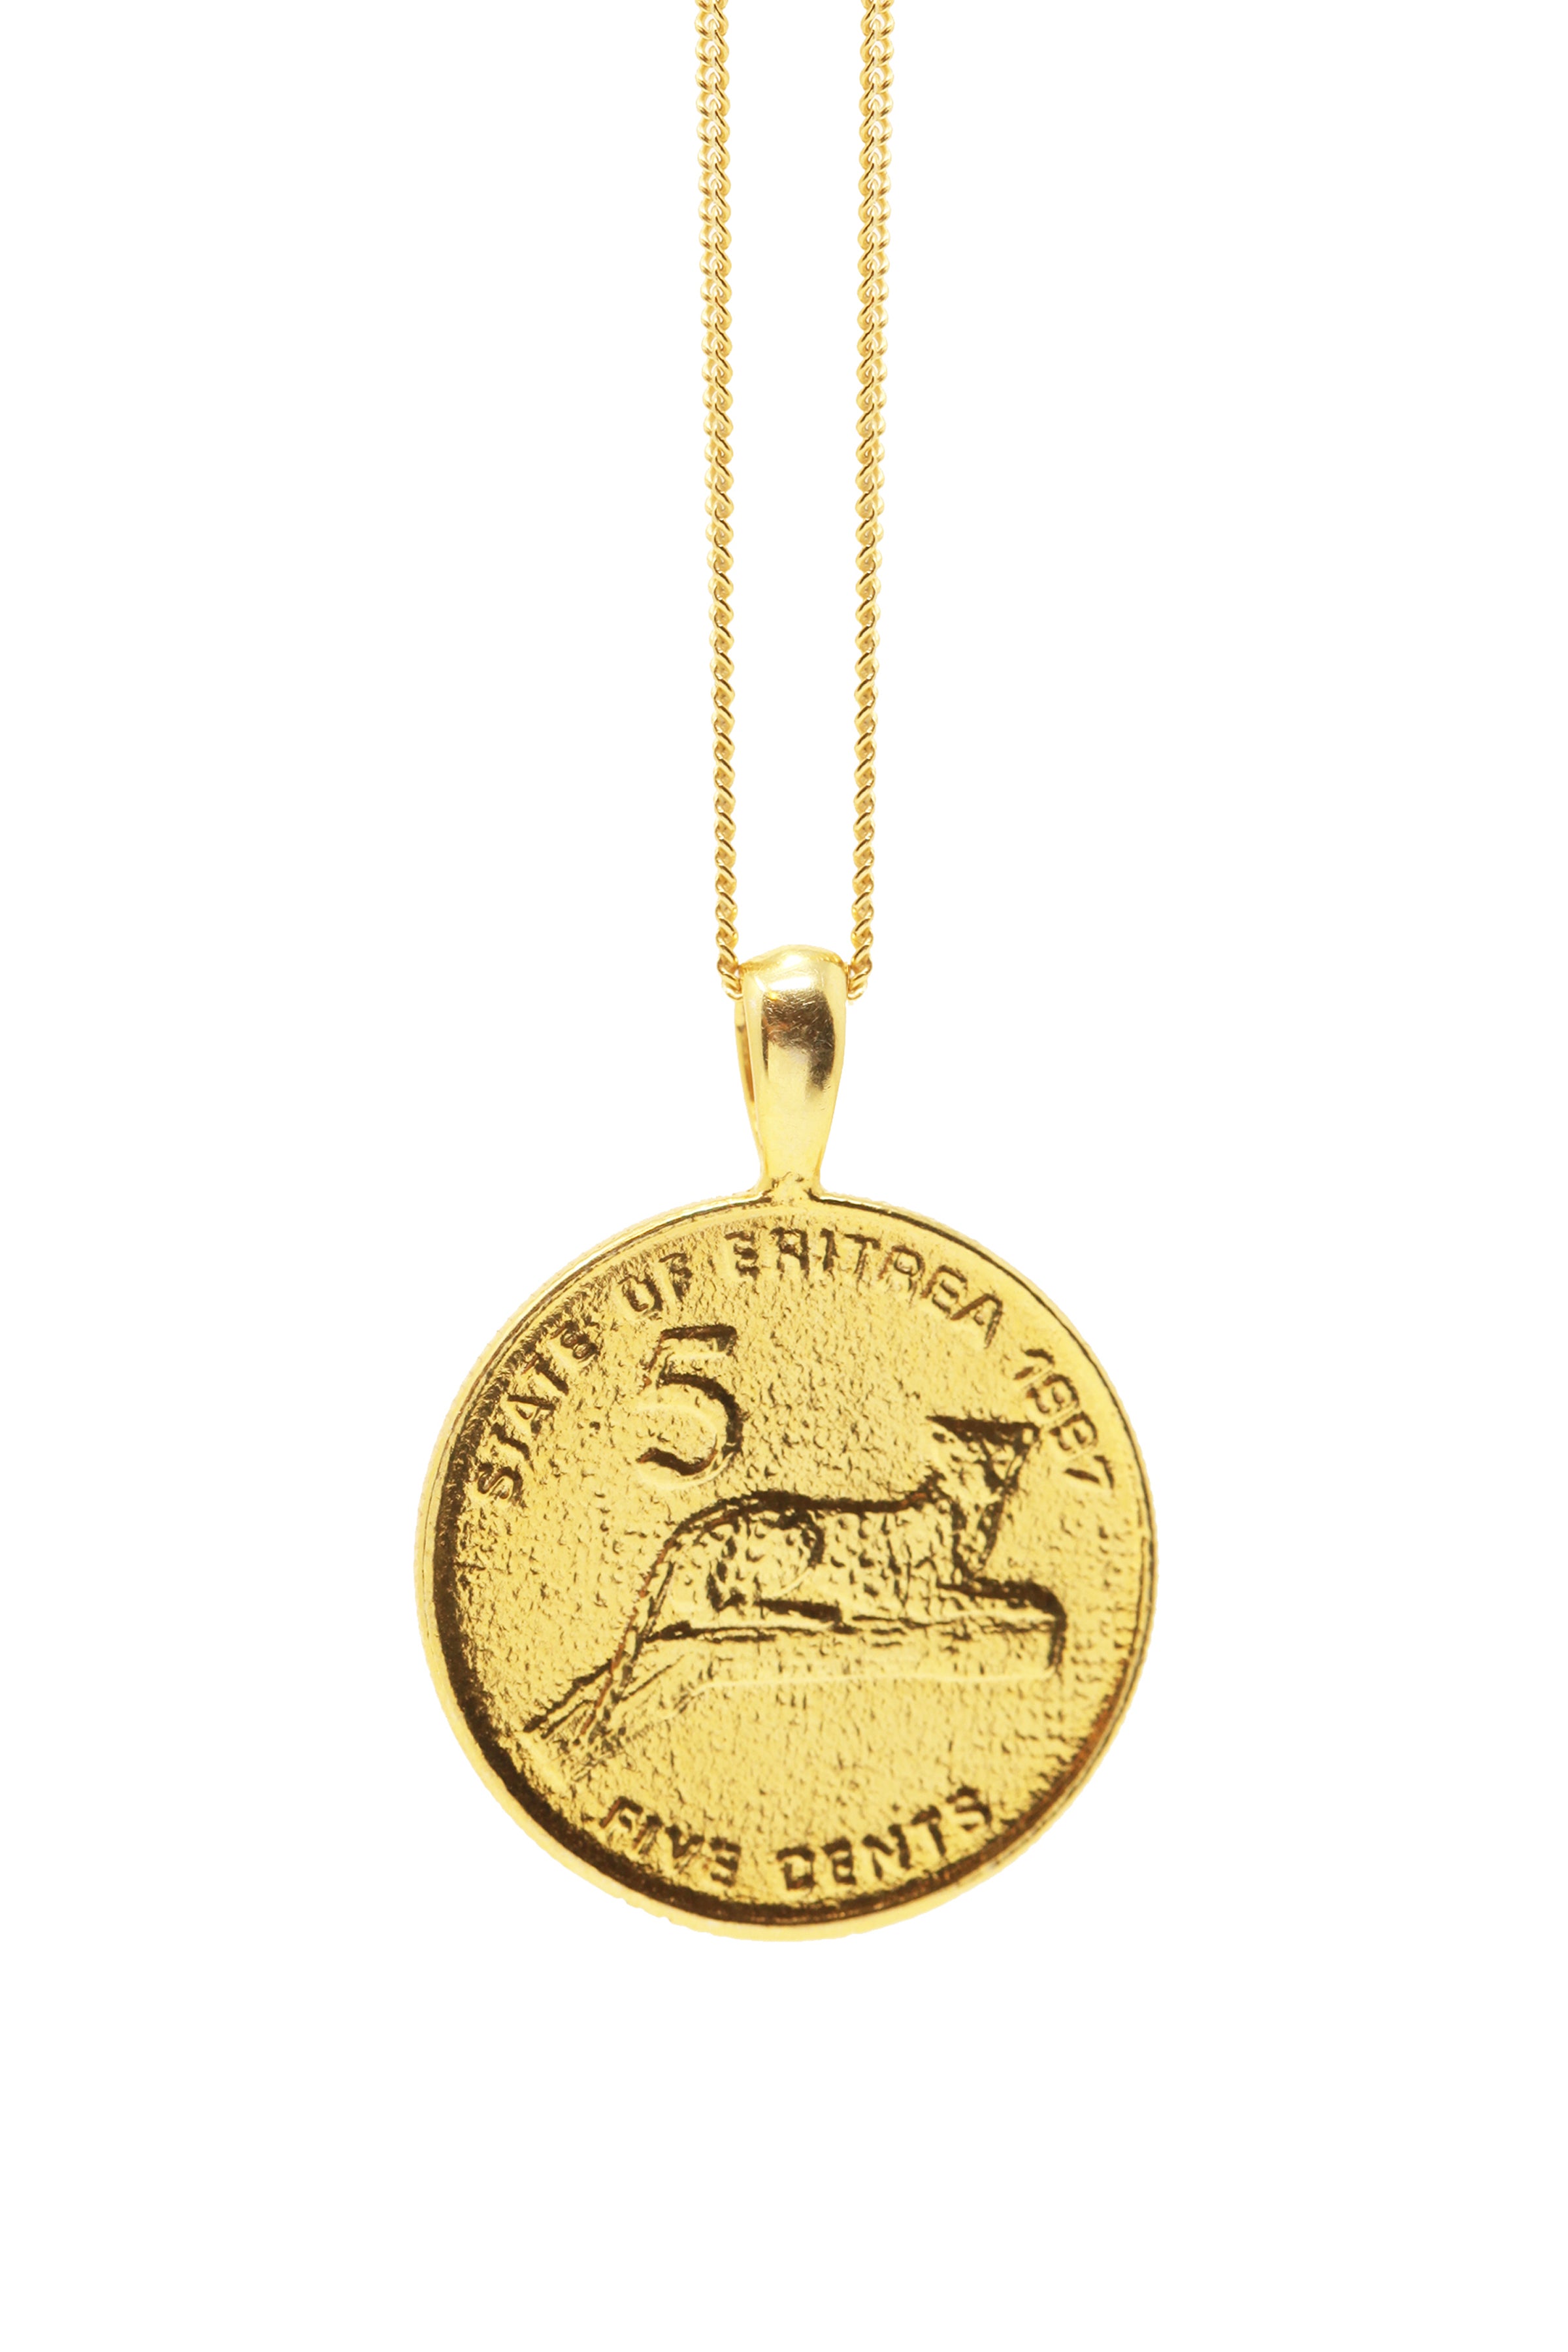 THE ERITREA Leopard Coin Necklace